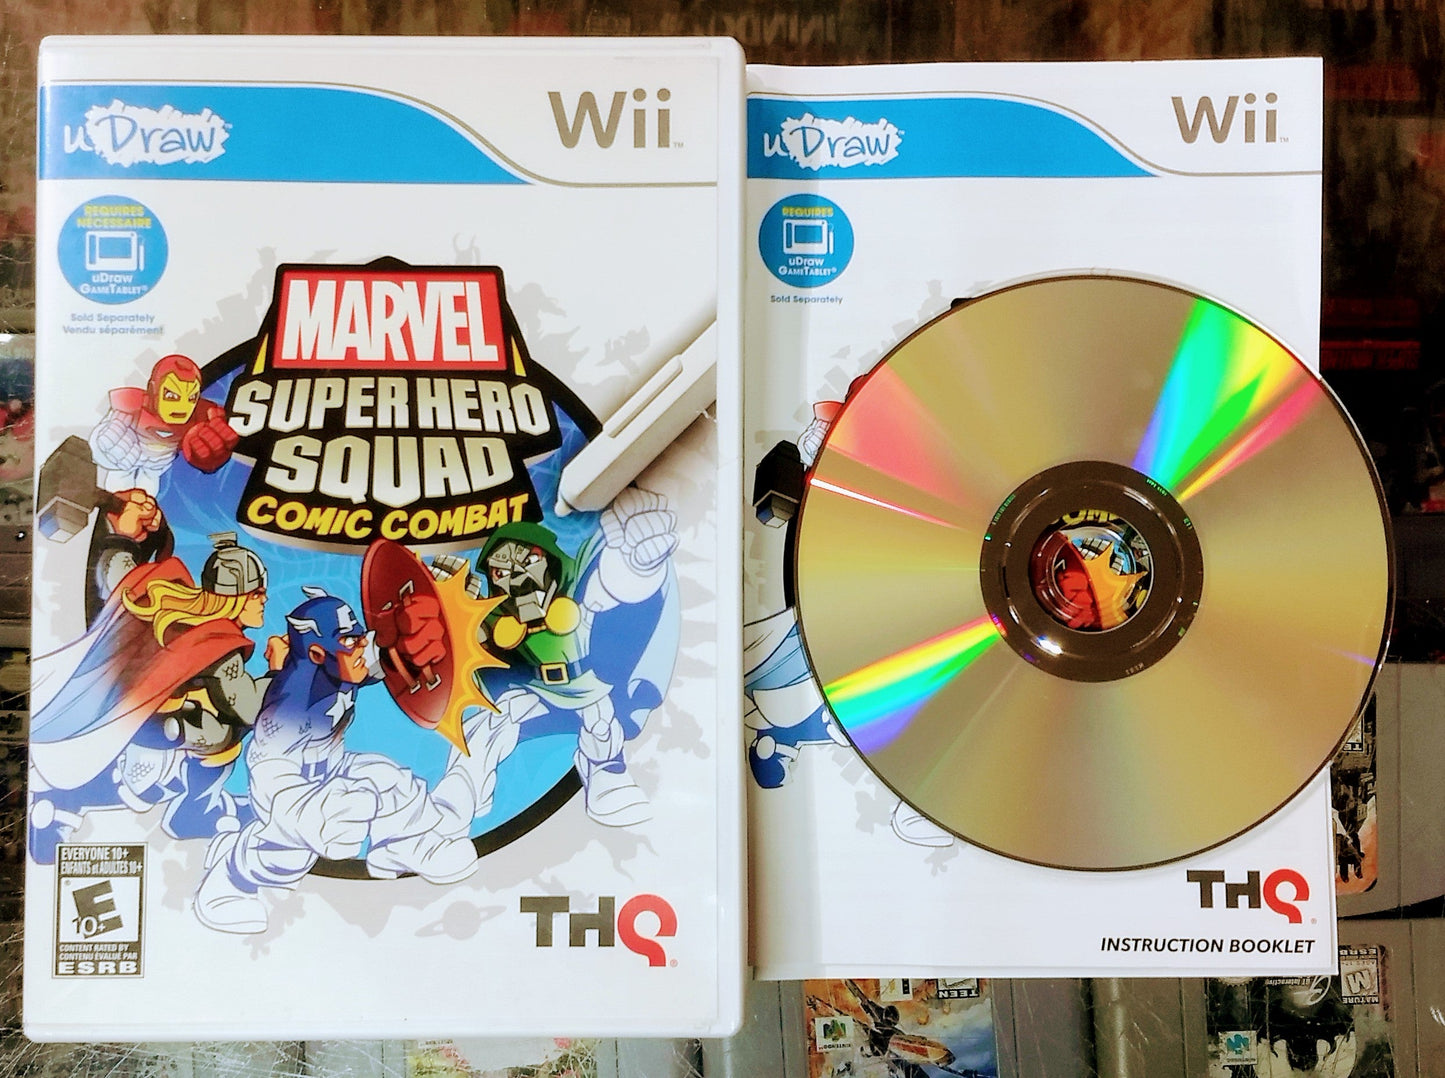 UDRAW MARVEL SUPER HERO SQUAD: COMIC COMBAT NINTENDO WII - jeux video game-x